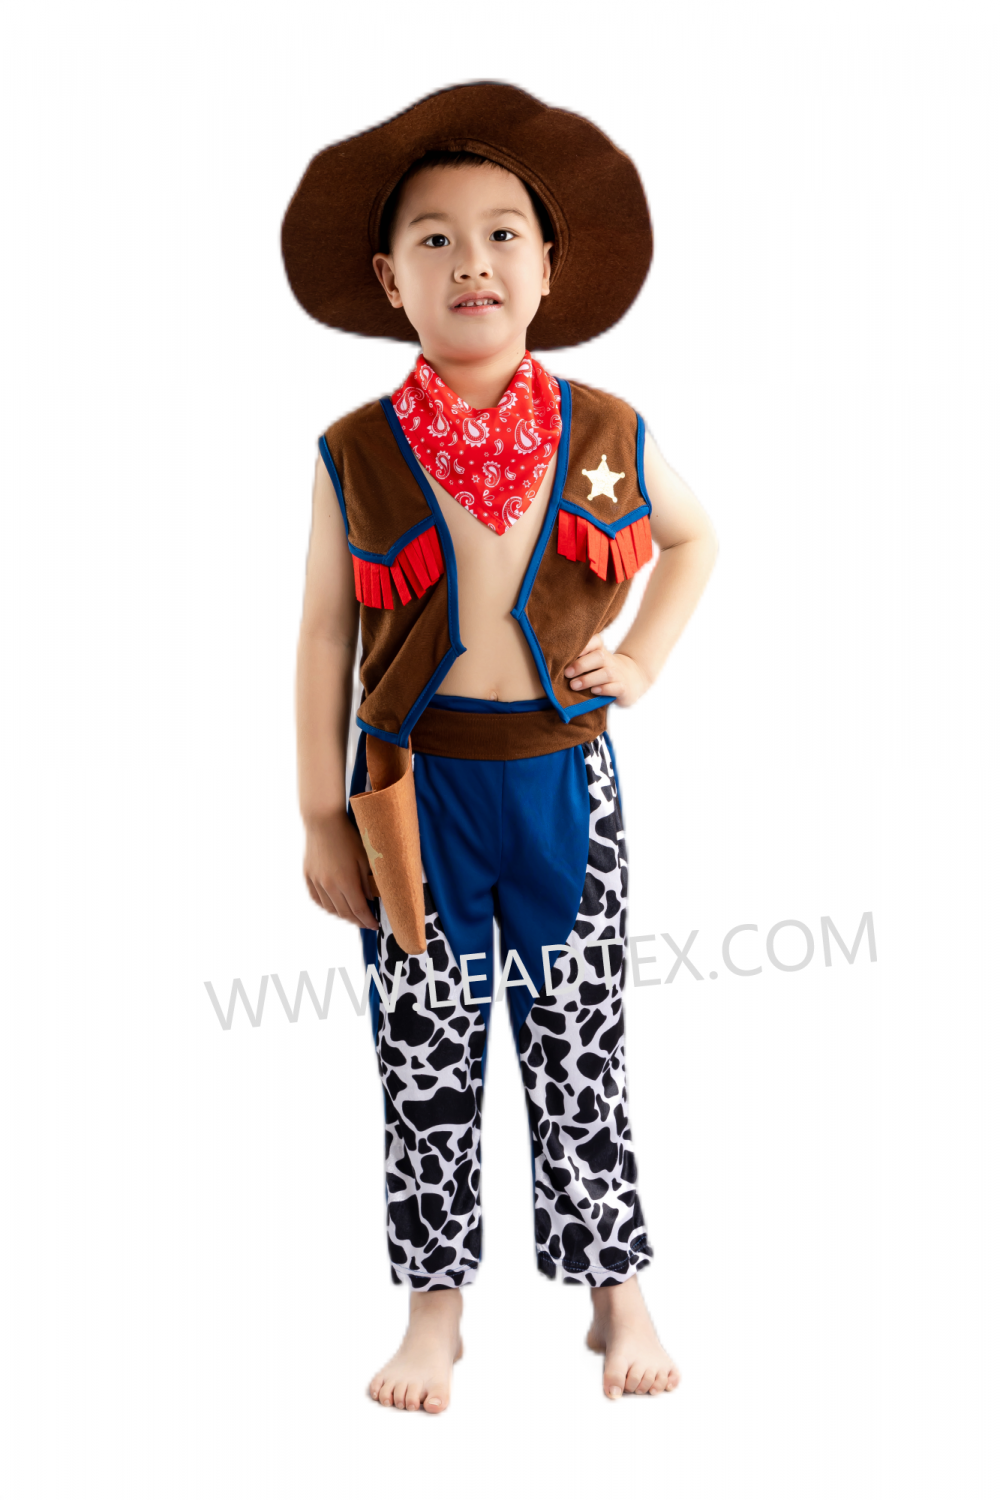 Cowboy costumes